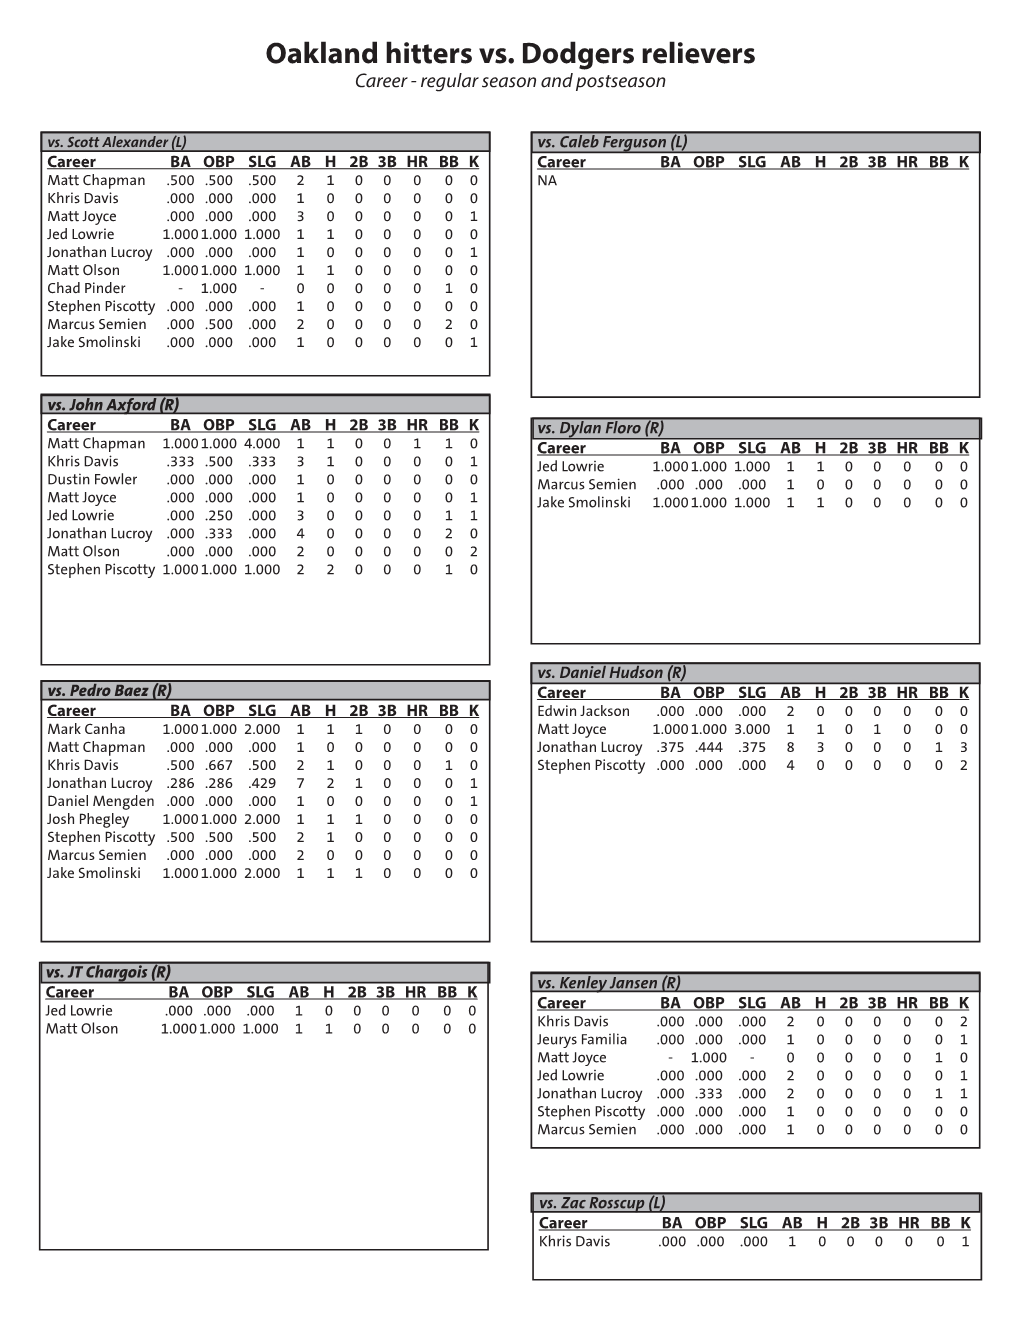 Oakland Hitters Vs. Dodgers Relievers Career - Regular Season and Postseason Vs